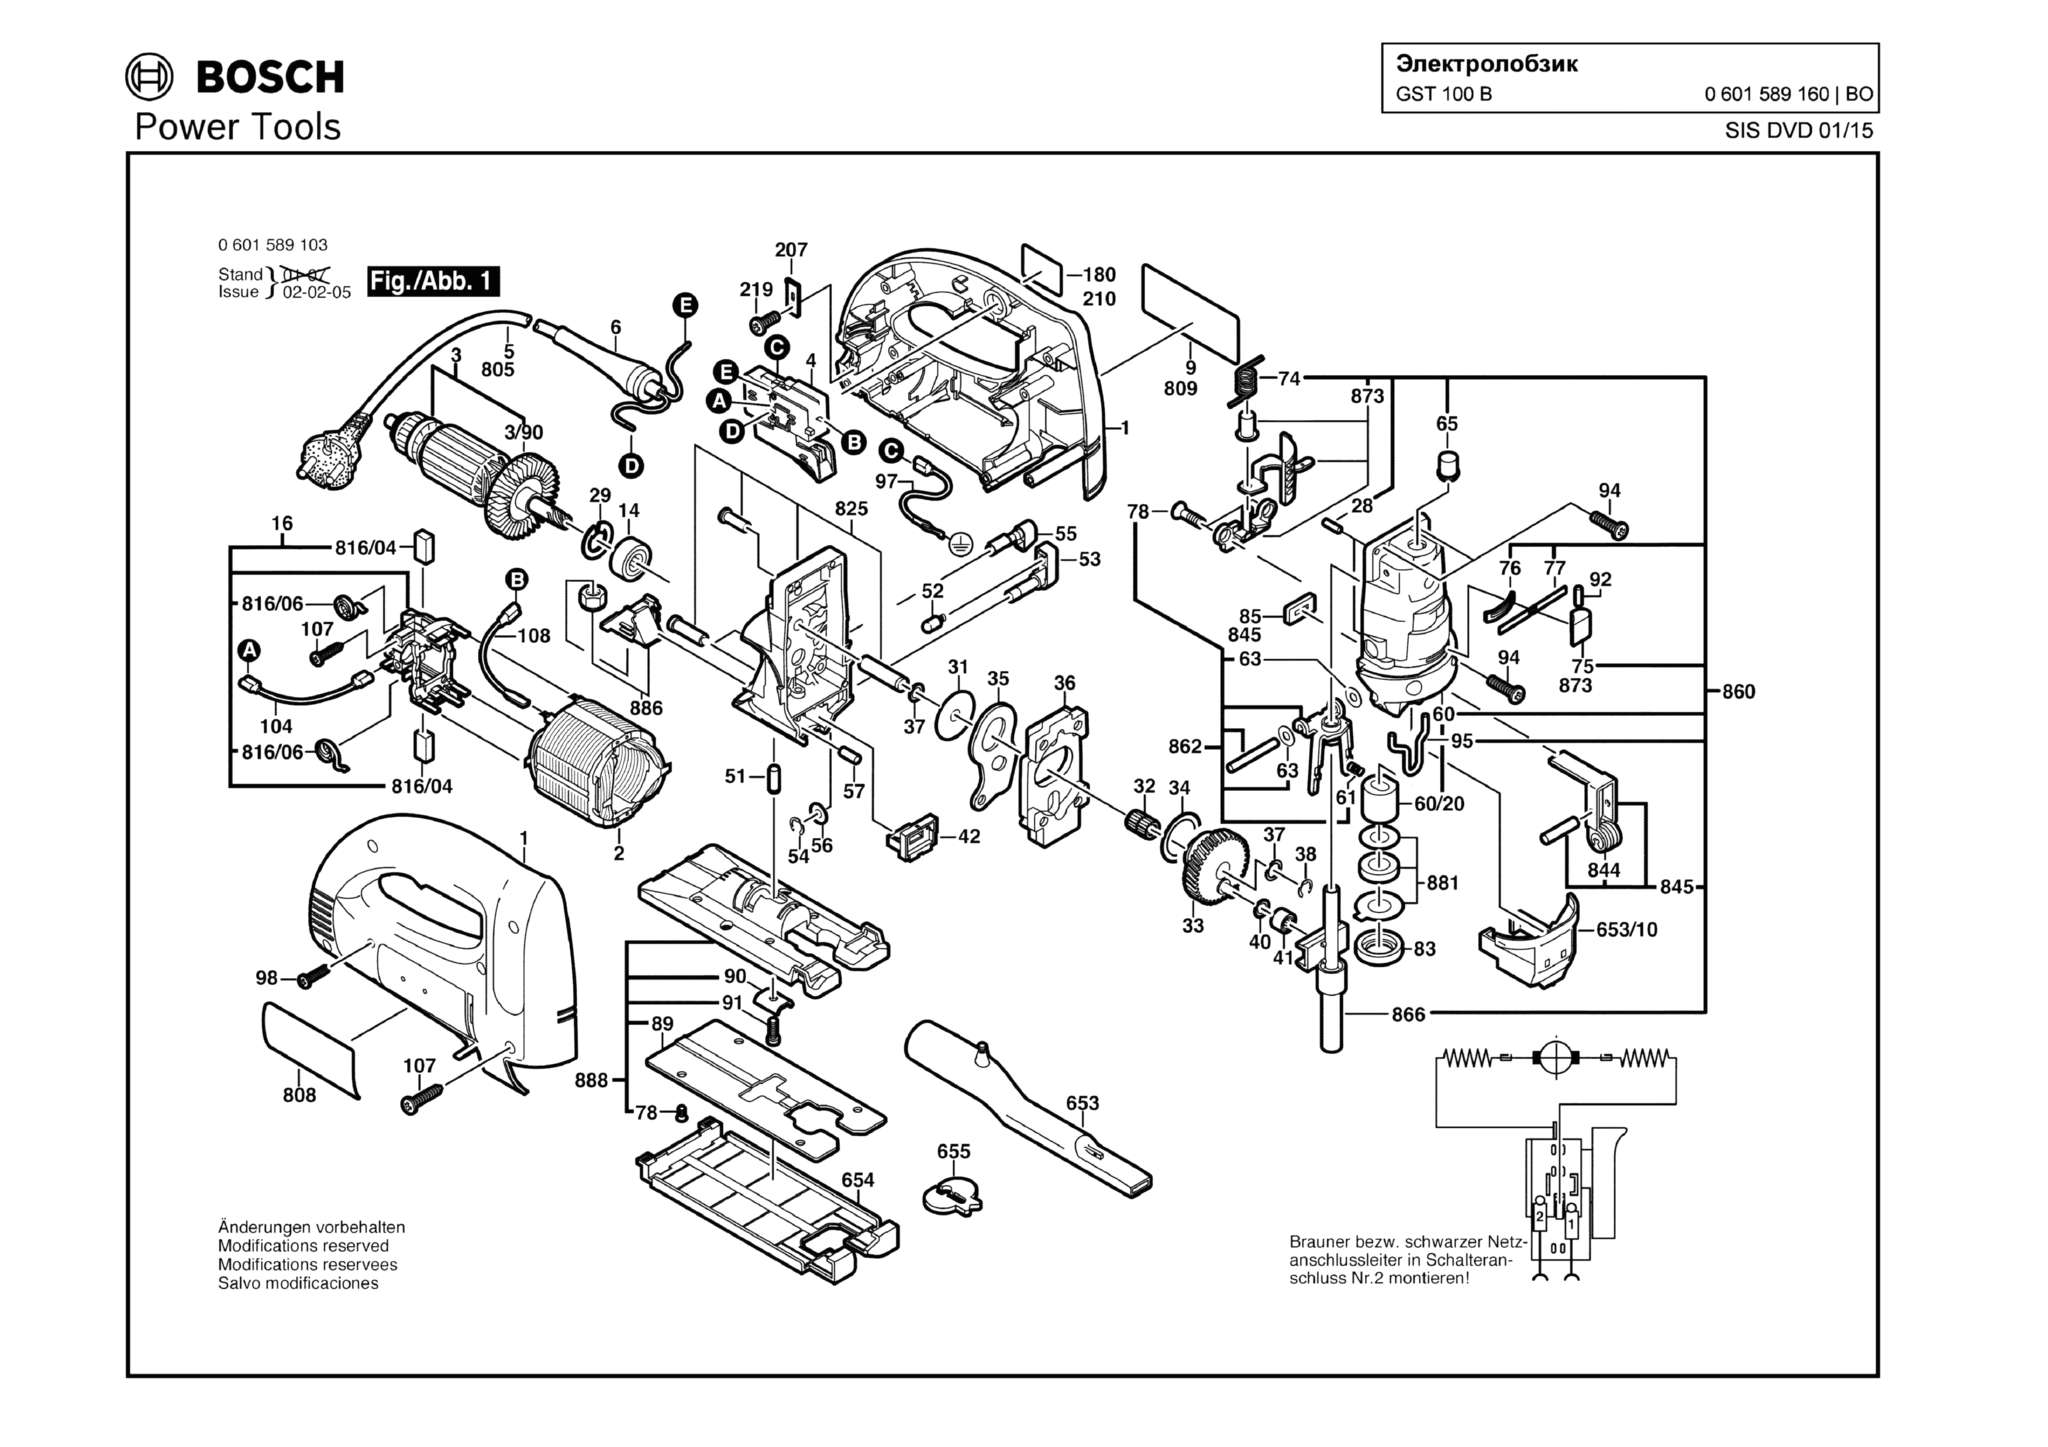 Запчасти, схема и деталировка Bosch GST 100 B (ТИП 0601589160)